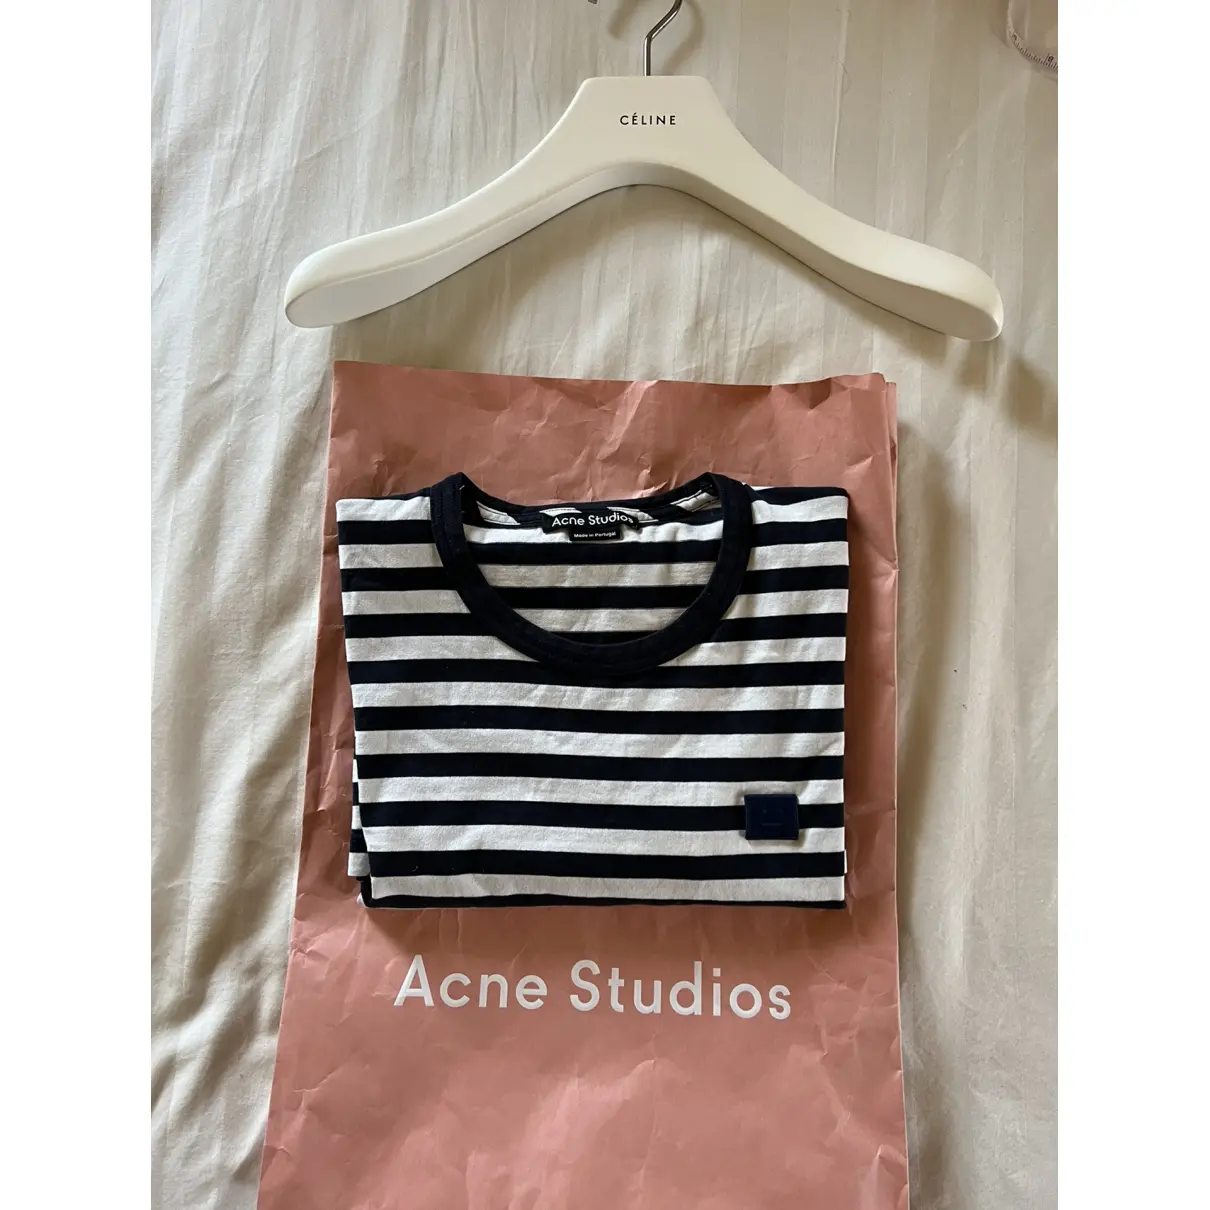 T-shirt Acne Studios